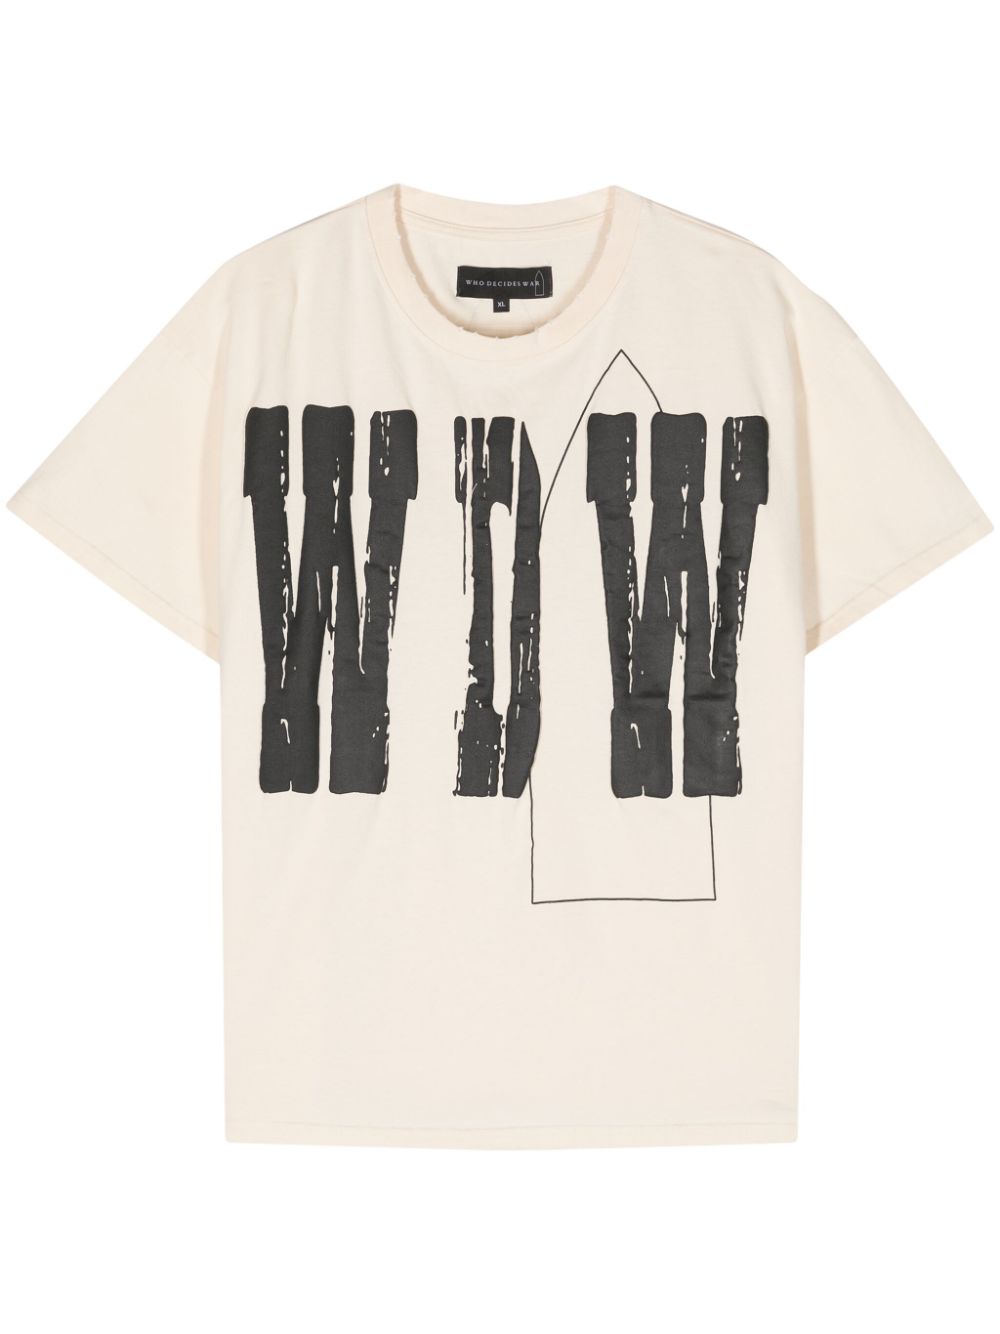 Who Decides War t-shirt WDW en coton - Tons neutres Top Merken Winkel